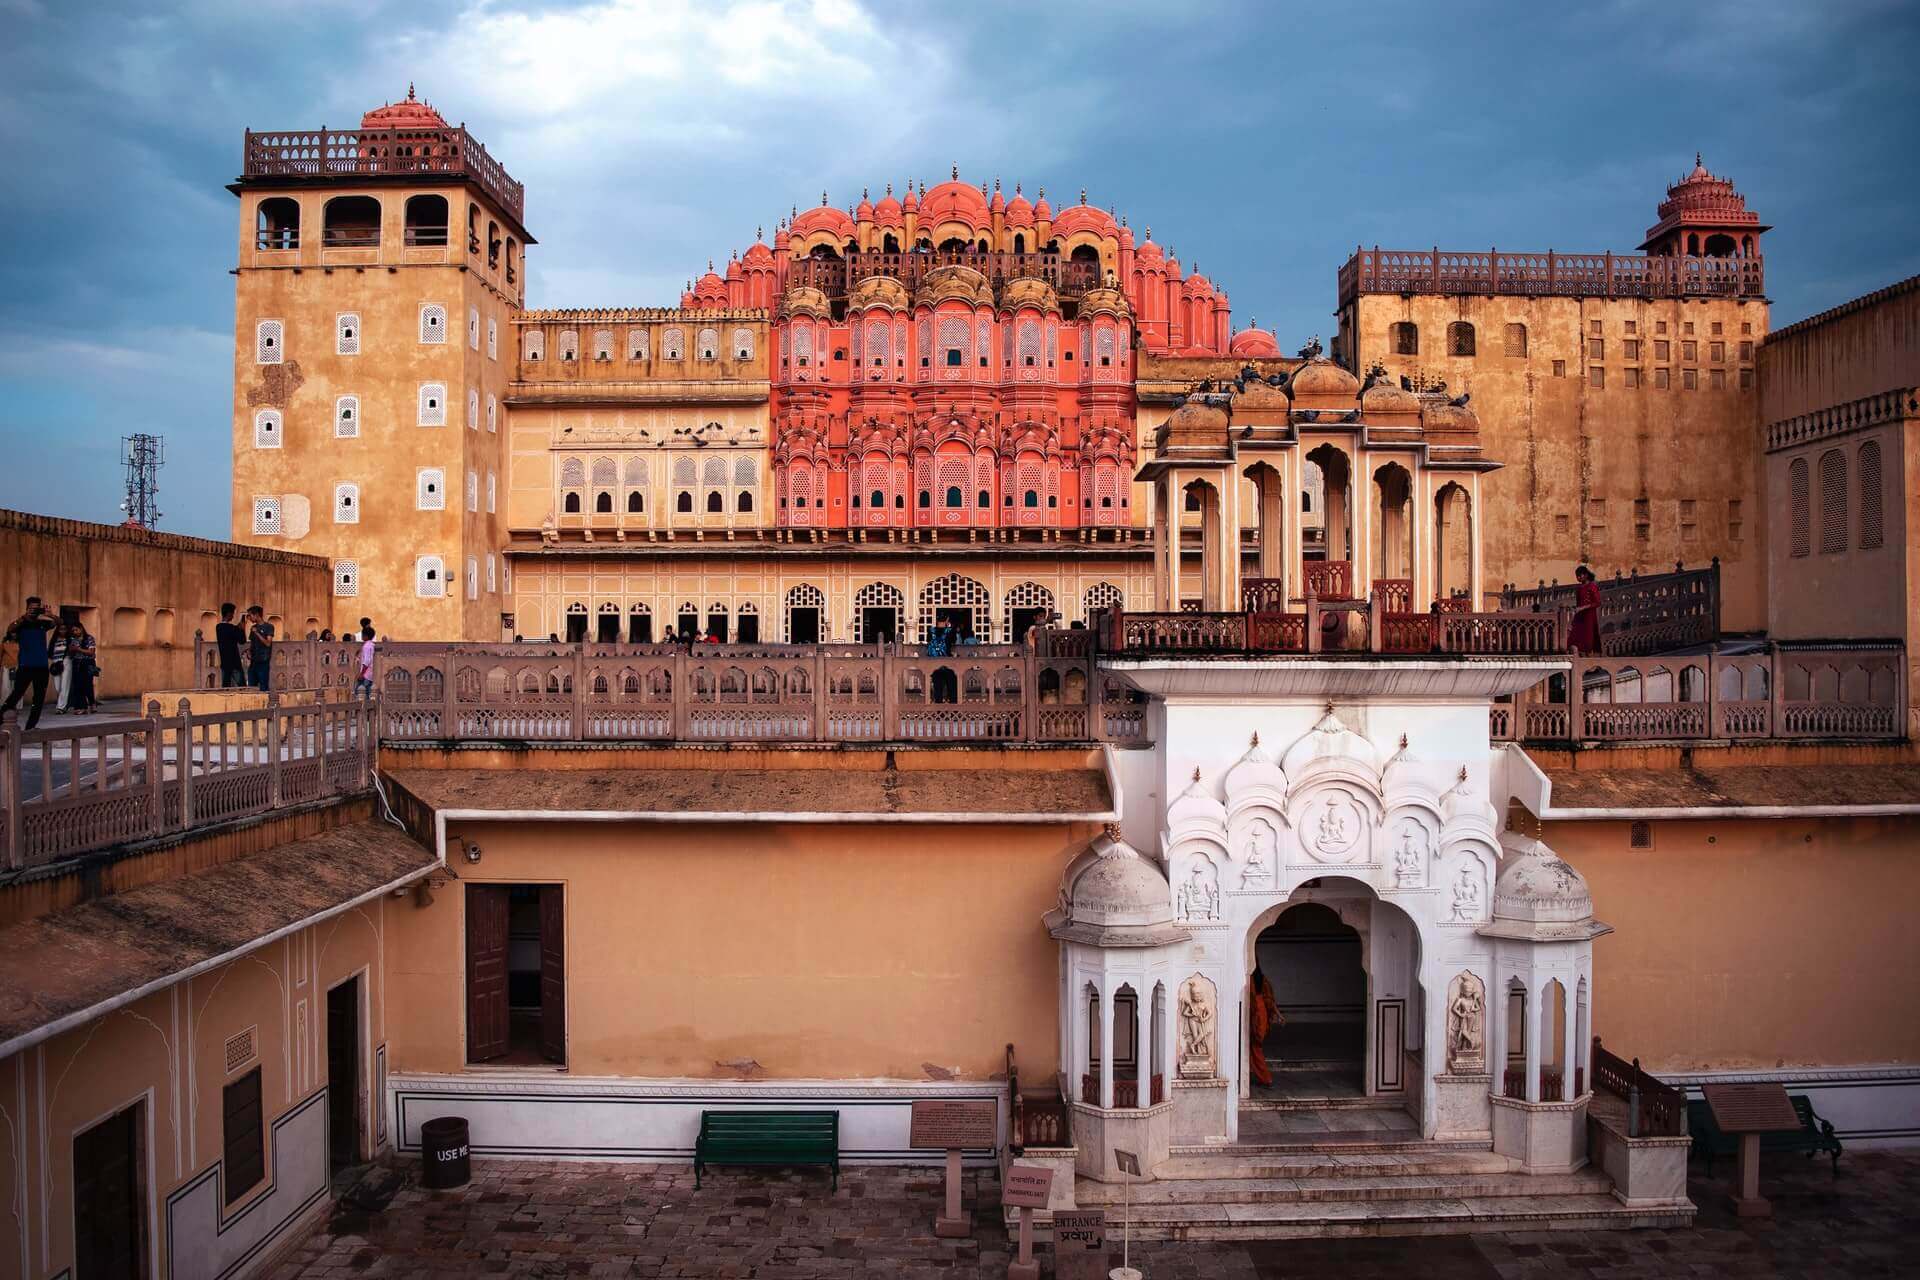 Hawa Mahal Jaipur, India (Entry Fee, Timings, History, Built by, Images & Location) 